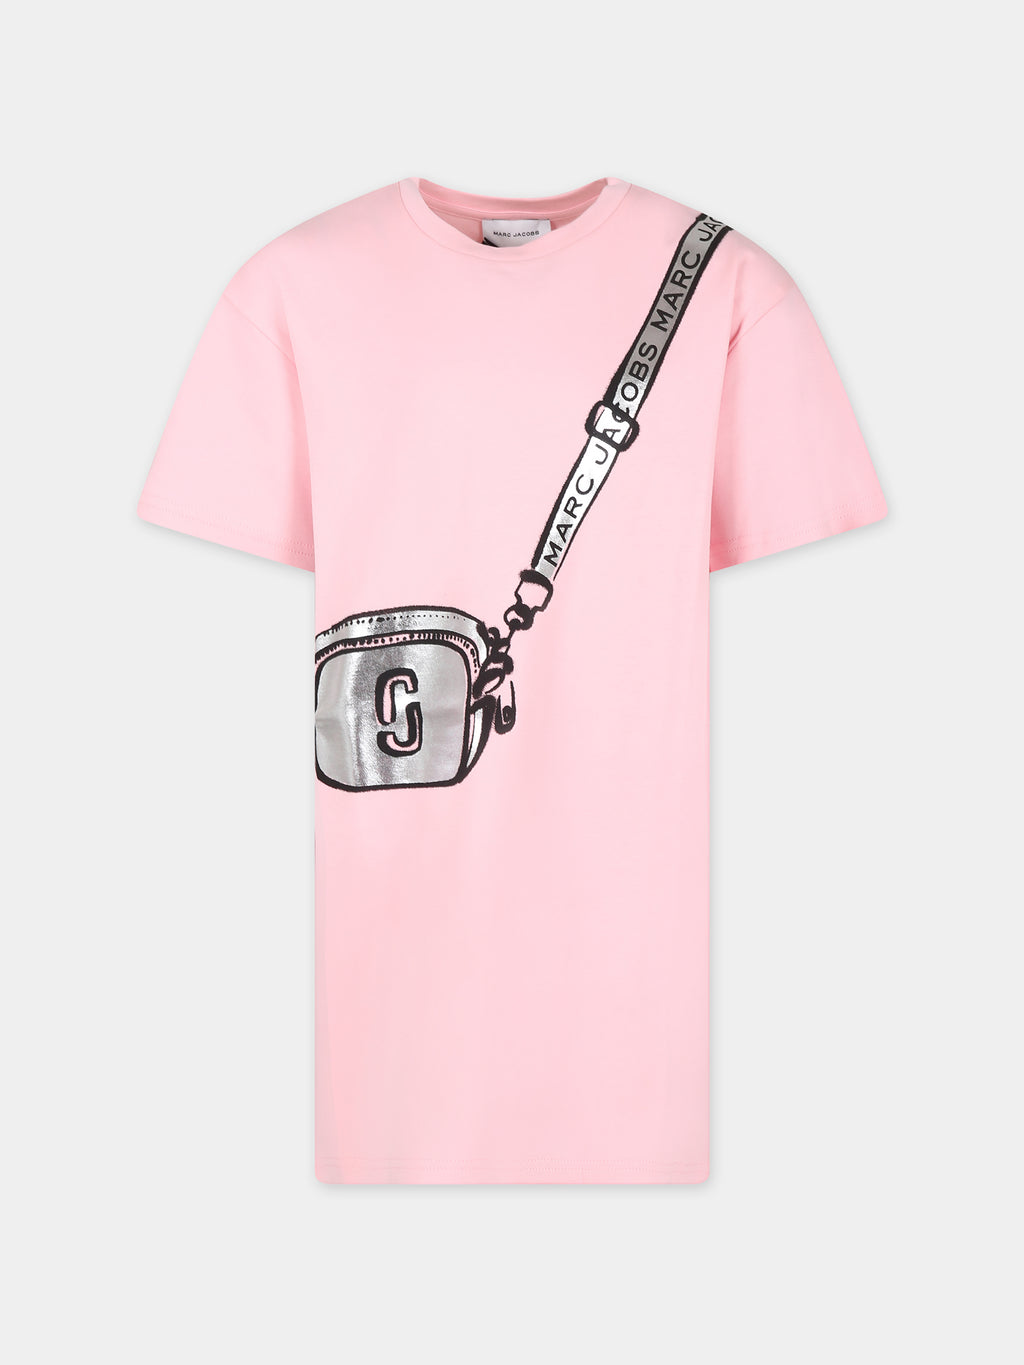 Pink dress for girl with bag print and logo